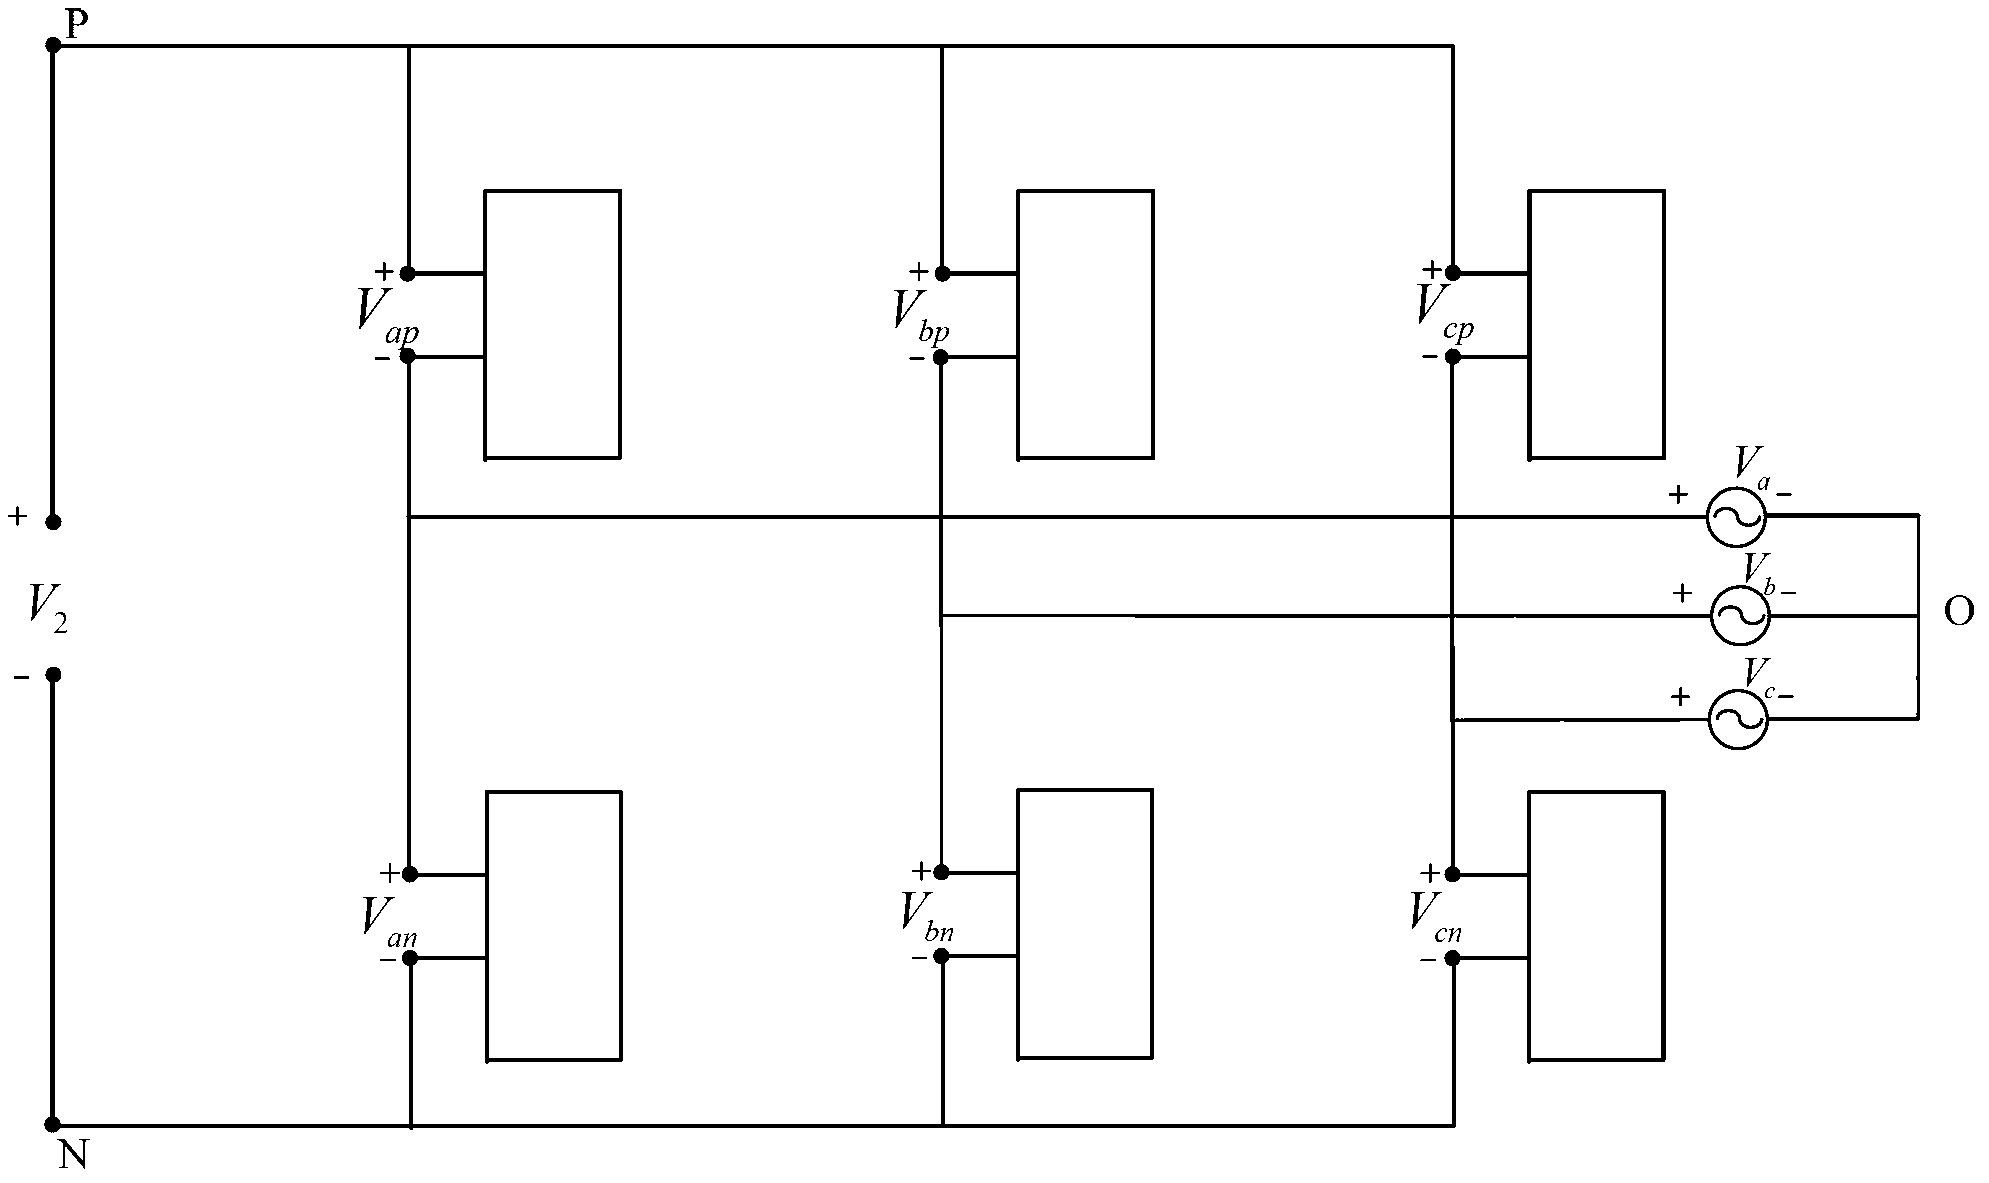 Battery energy storage system based on modular multilevel AC-AC (Alternating Current-Alternating Current) converter topology